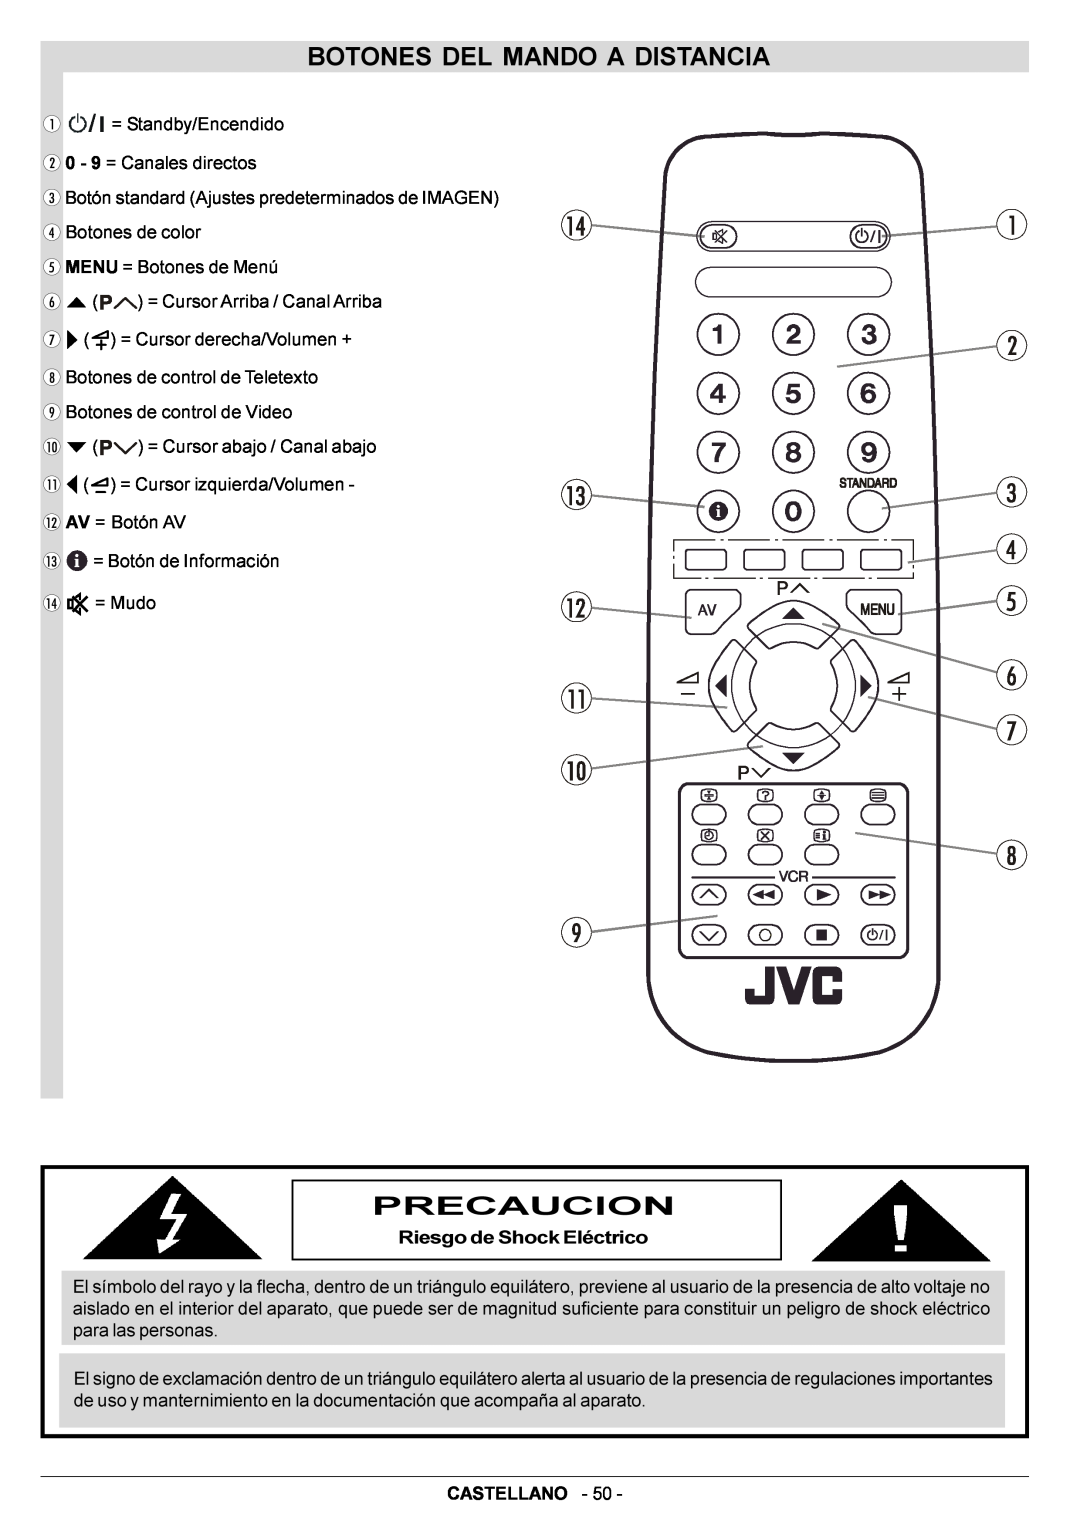 JVC AV14BJ8EPS manual Botones Del Mando A Distancia, Precaucion 